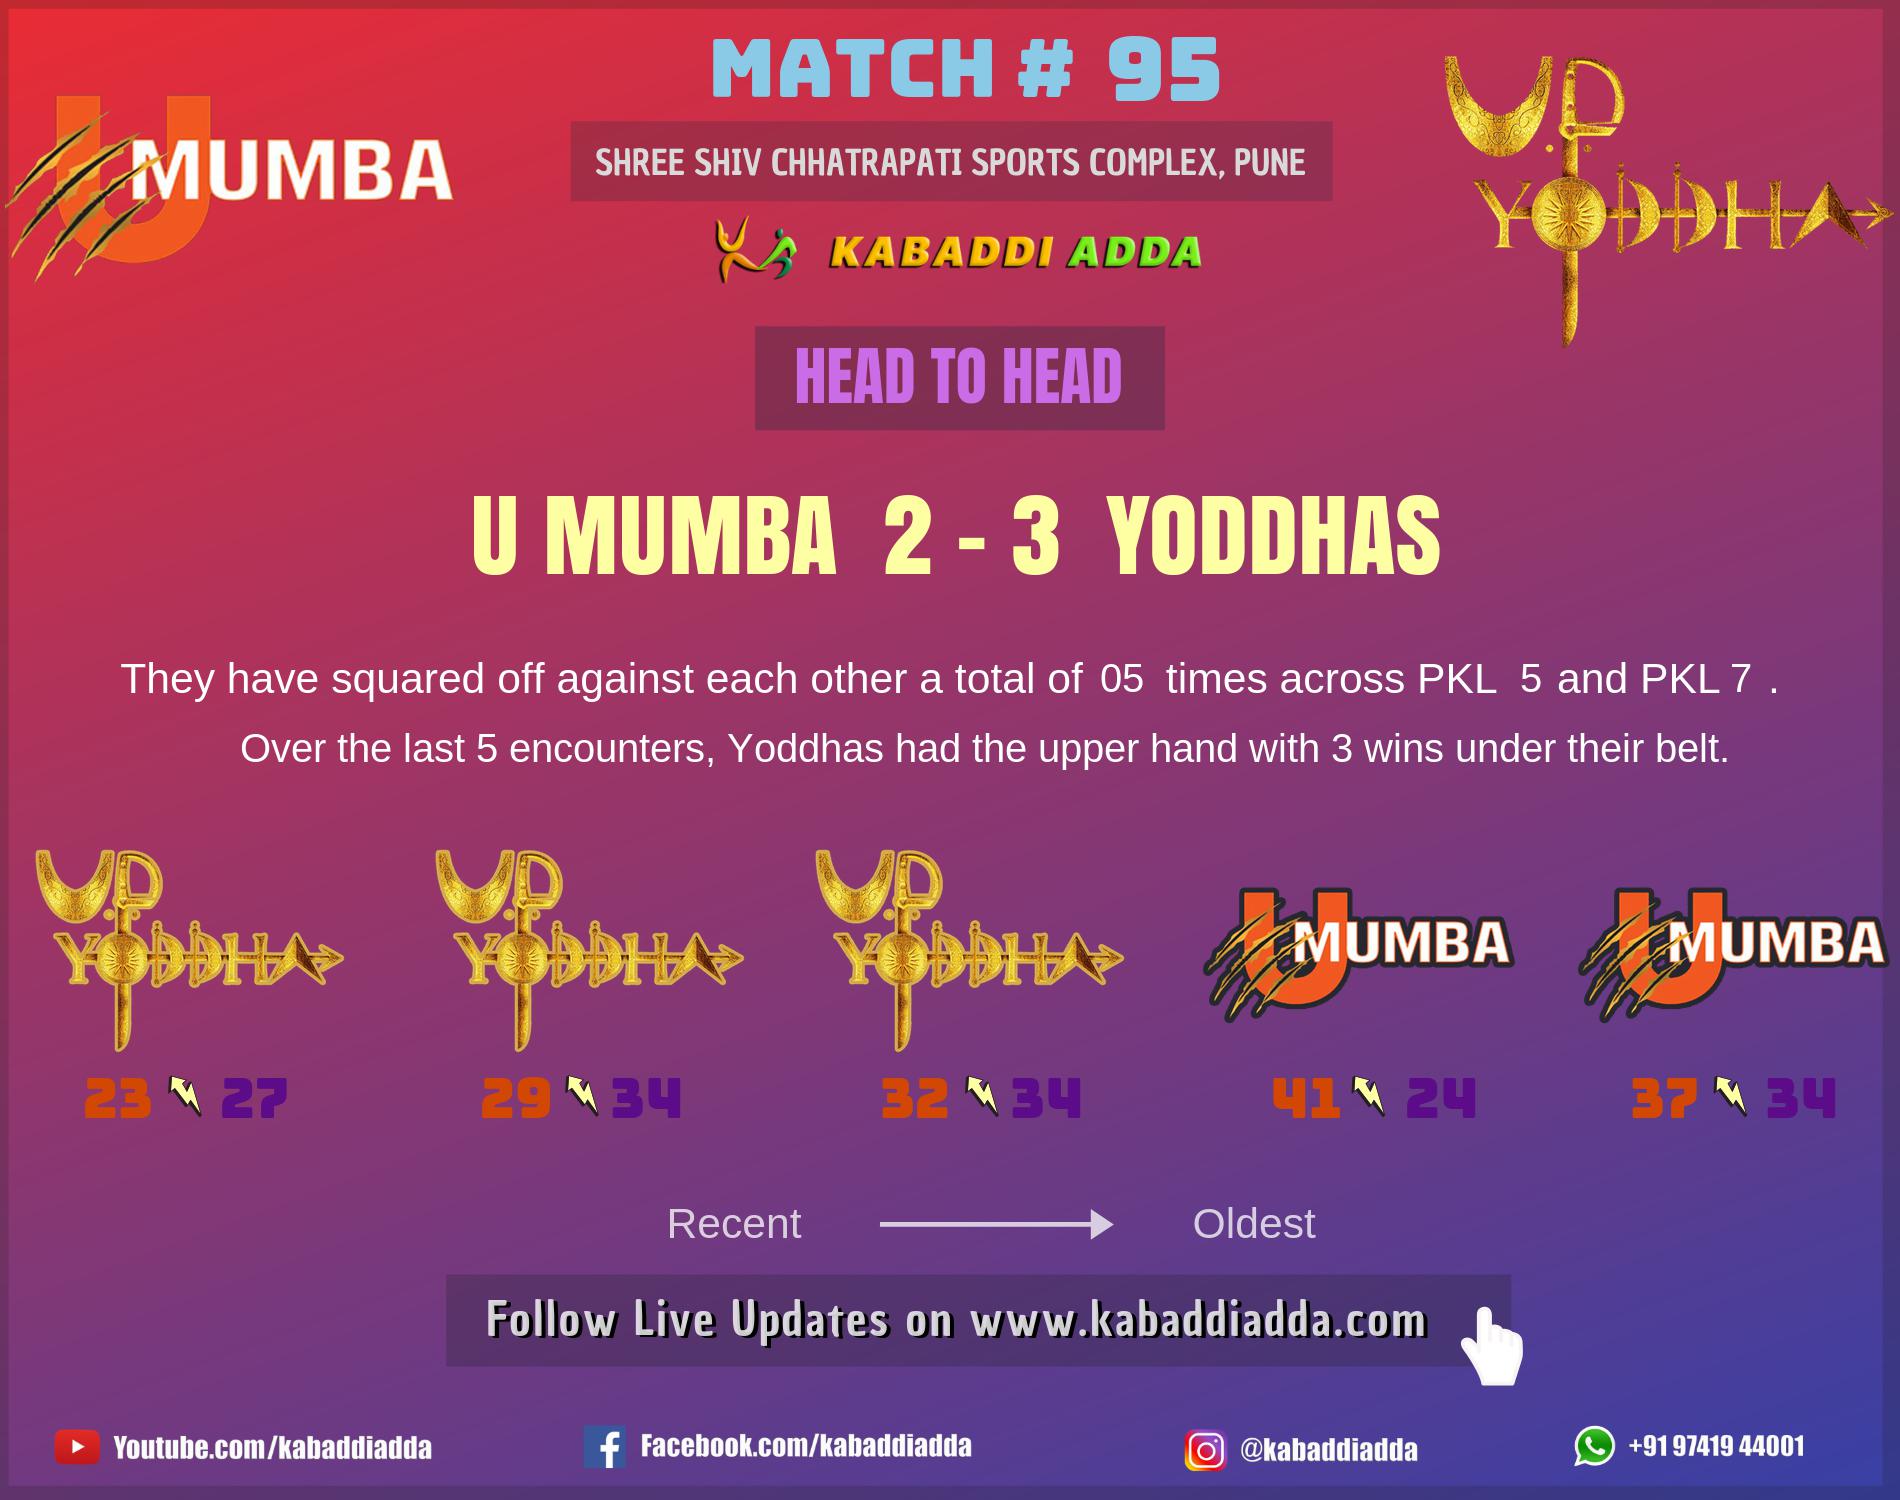 U Mumba is playing against UP Yoddhas